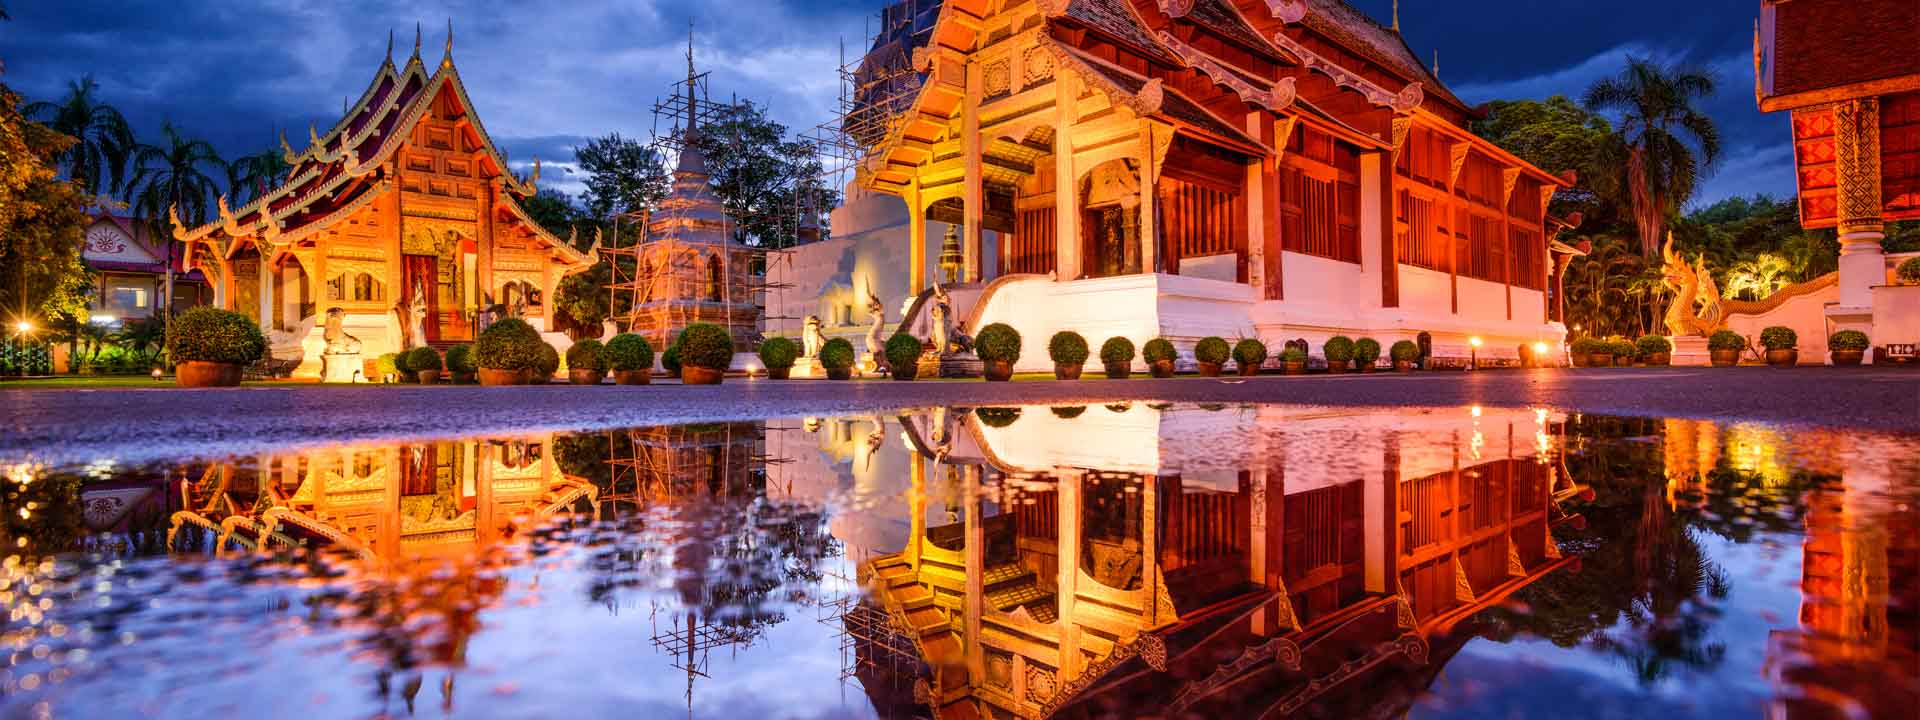 Dos semanas maravillas por Bali - Bangkok – Siem Reap - Vietnam